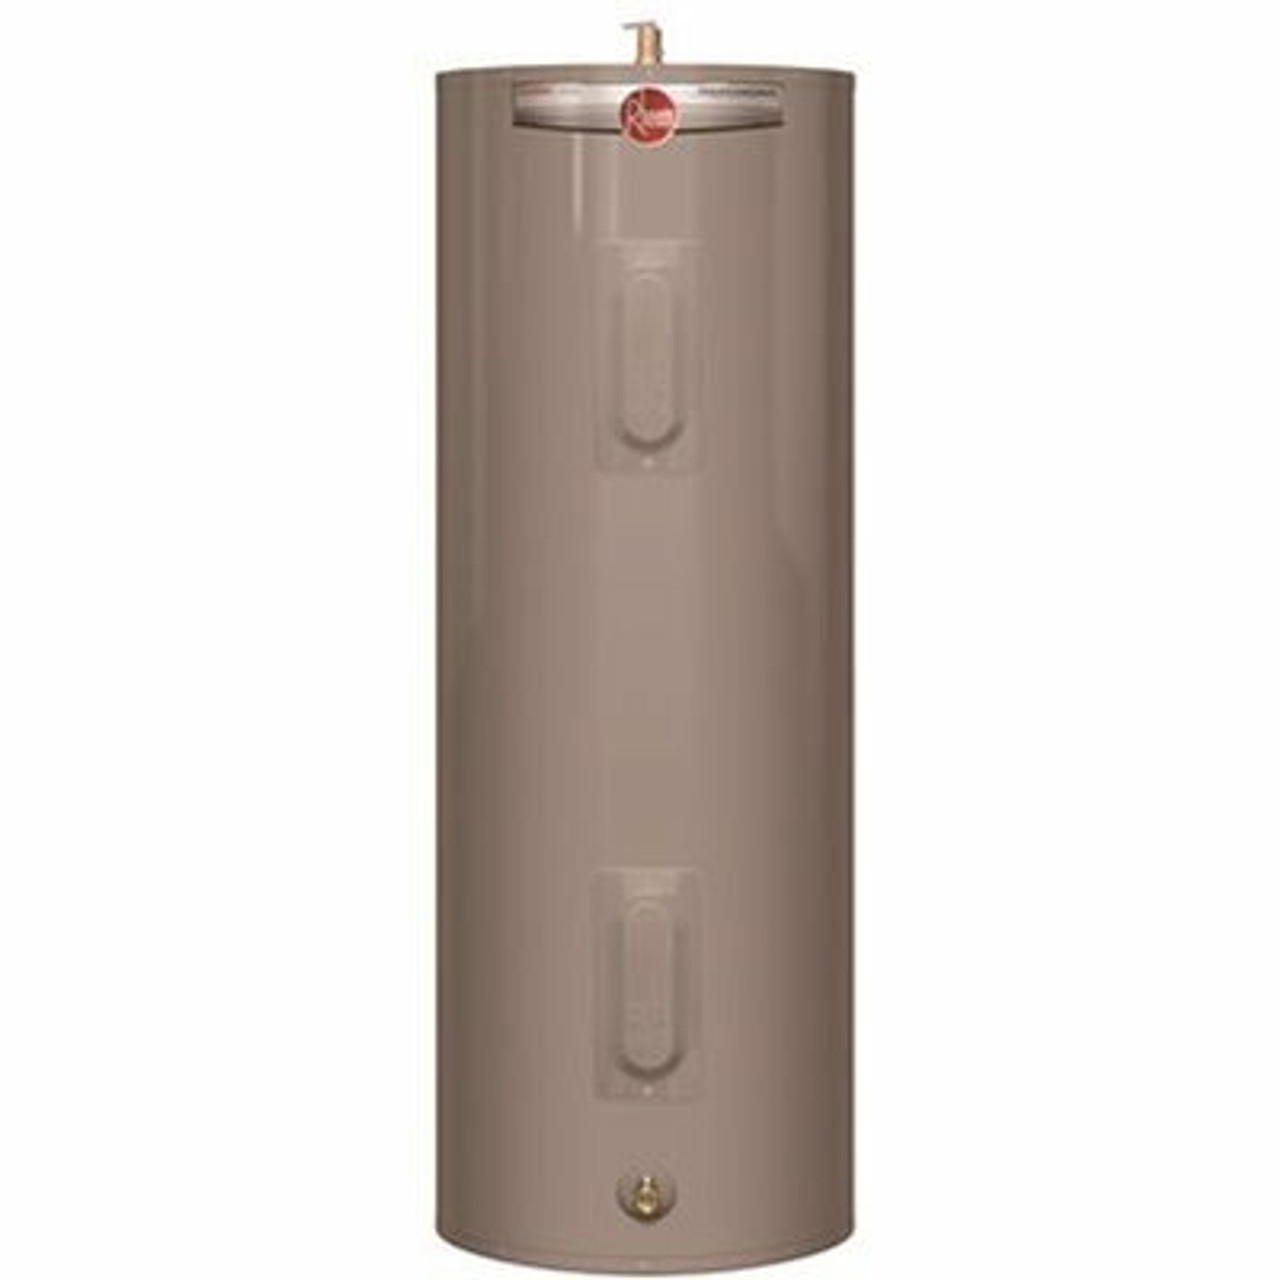 Rheem 50 Gal. Professional Classic Medium Residential Electric Water Heater 240-Volt Vac 4500-Watt Top T And P Relief Valve